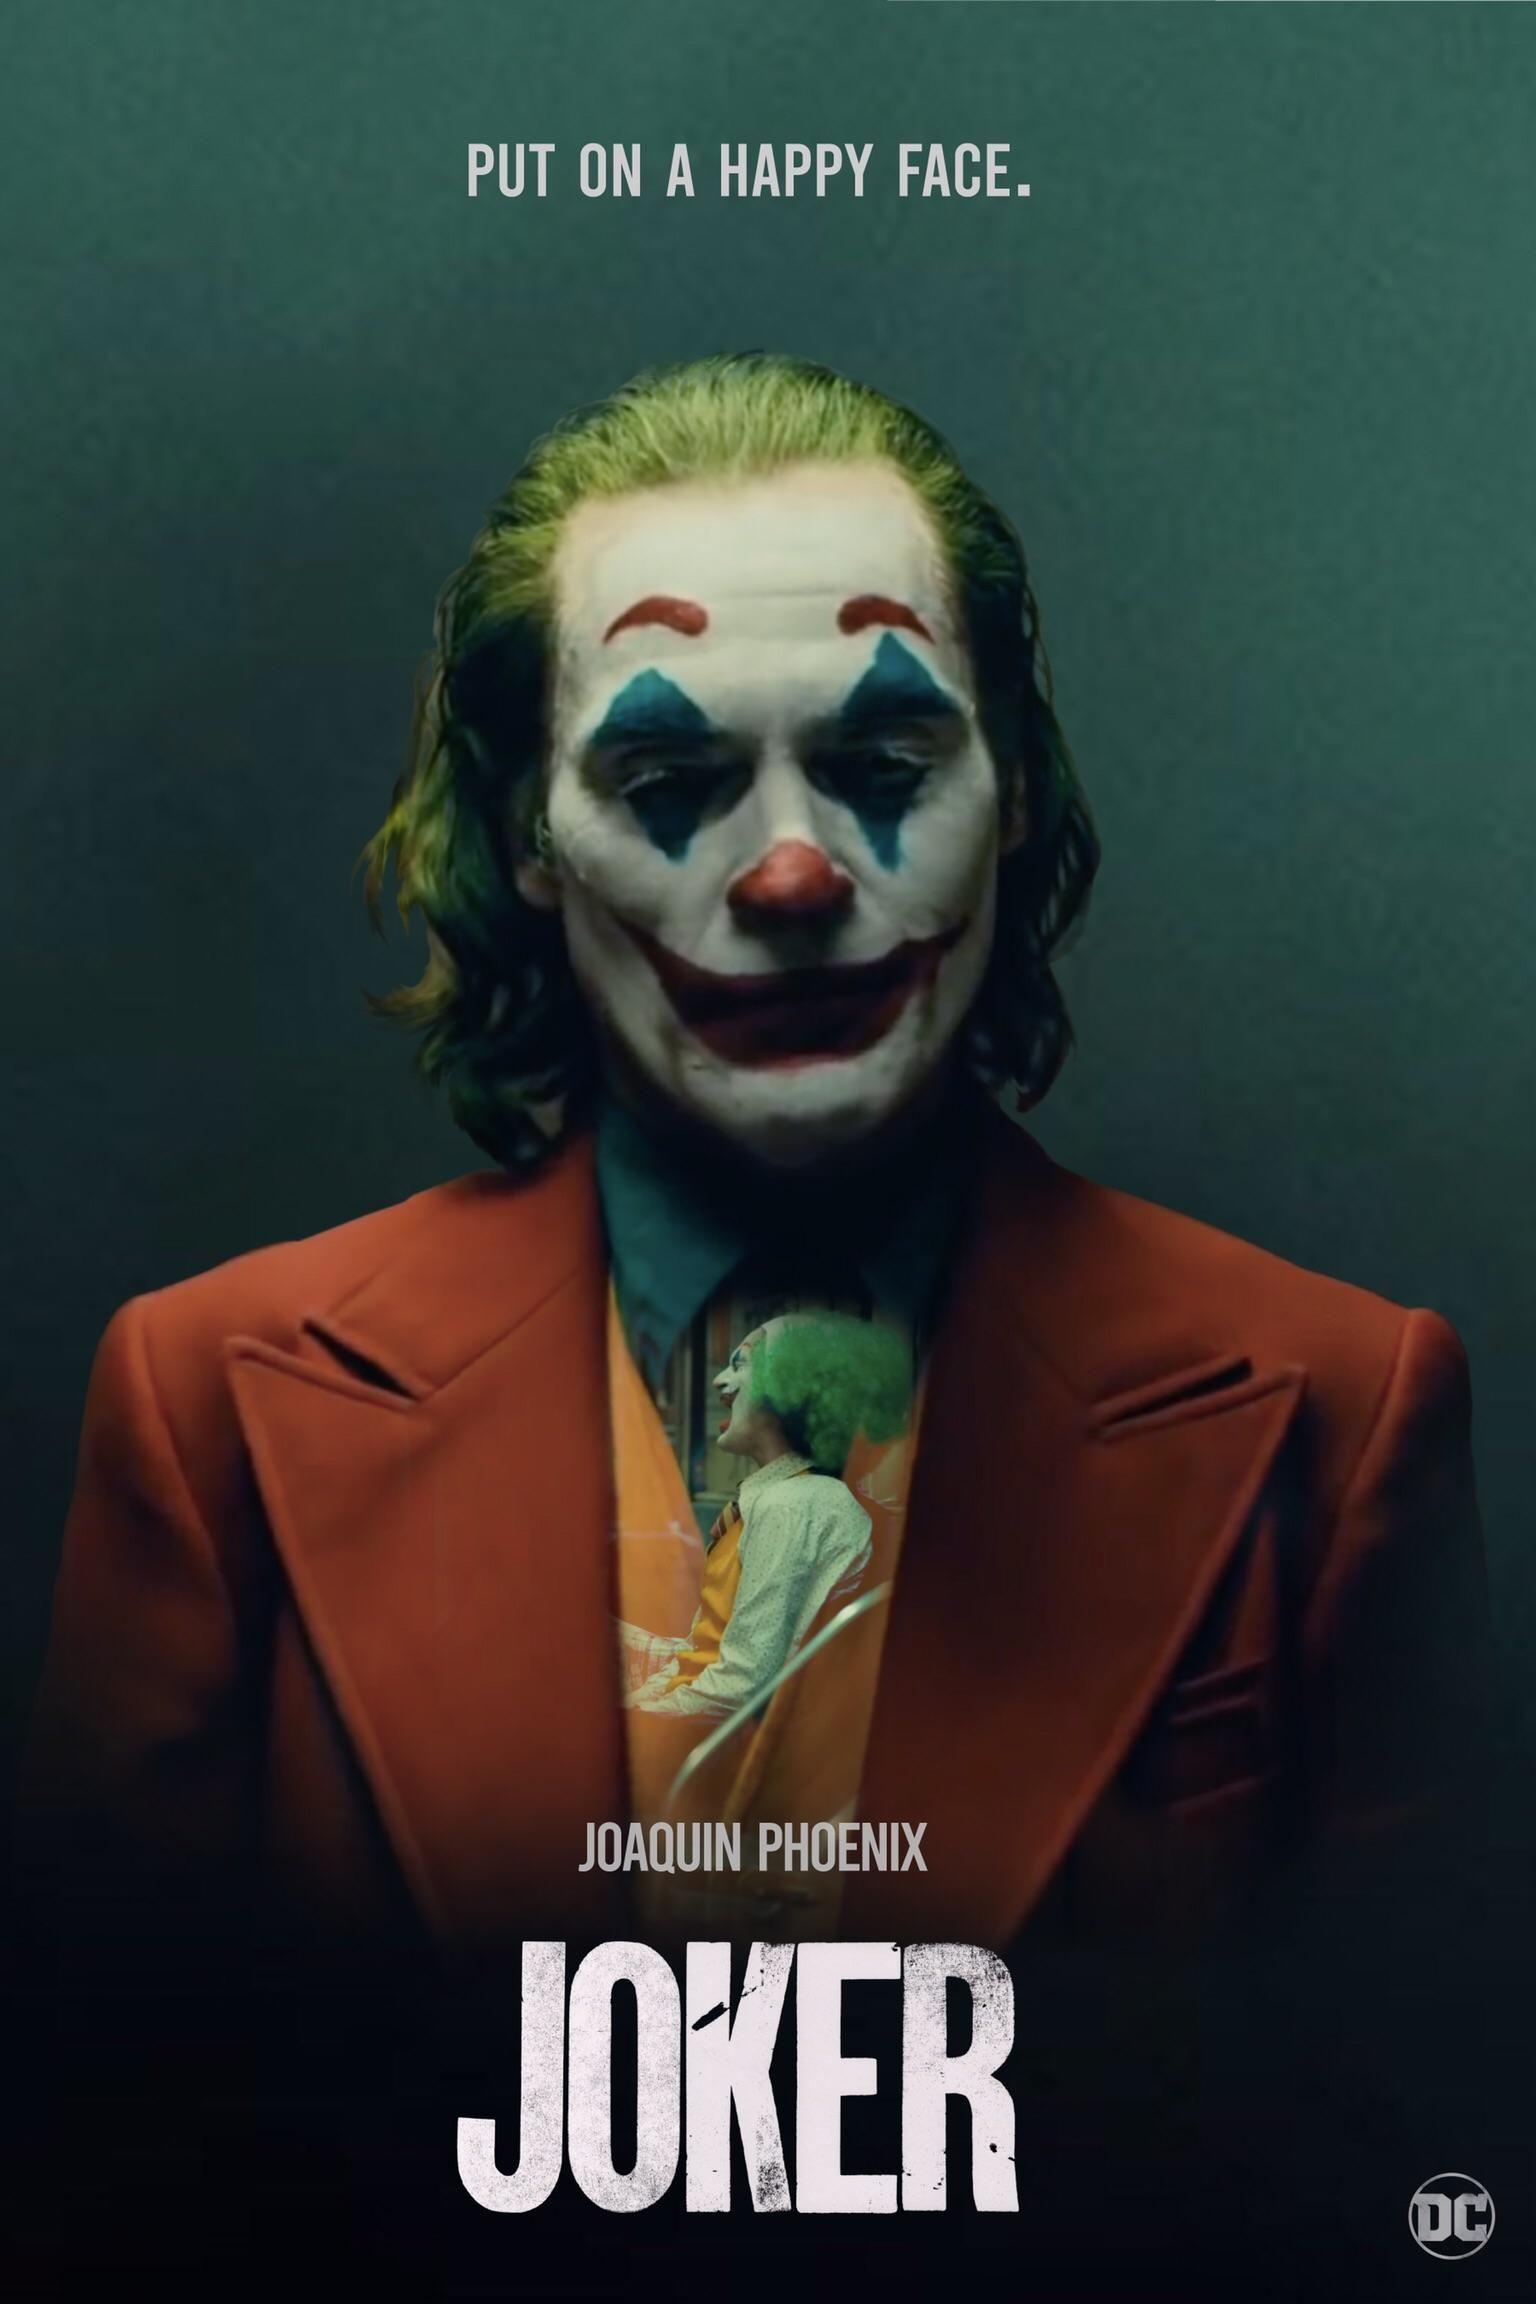 Joker Movie 2019 Wallpapers - Wallpaper Cave